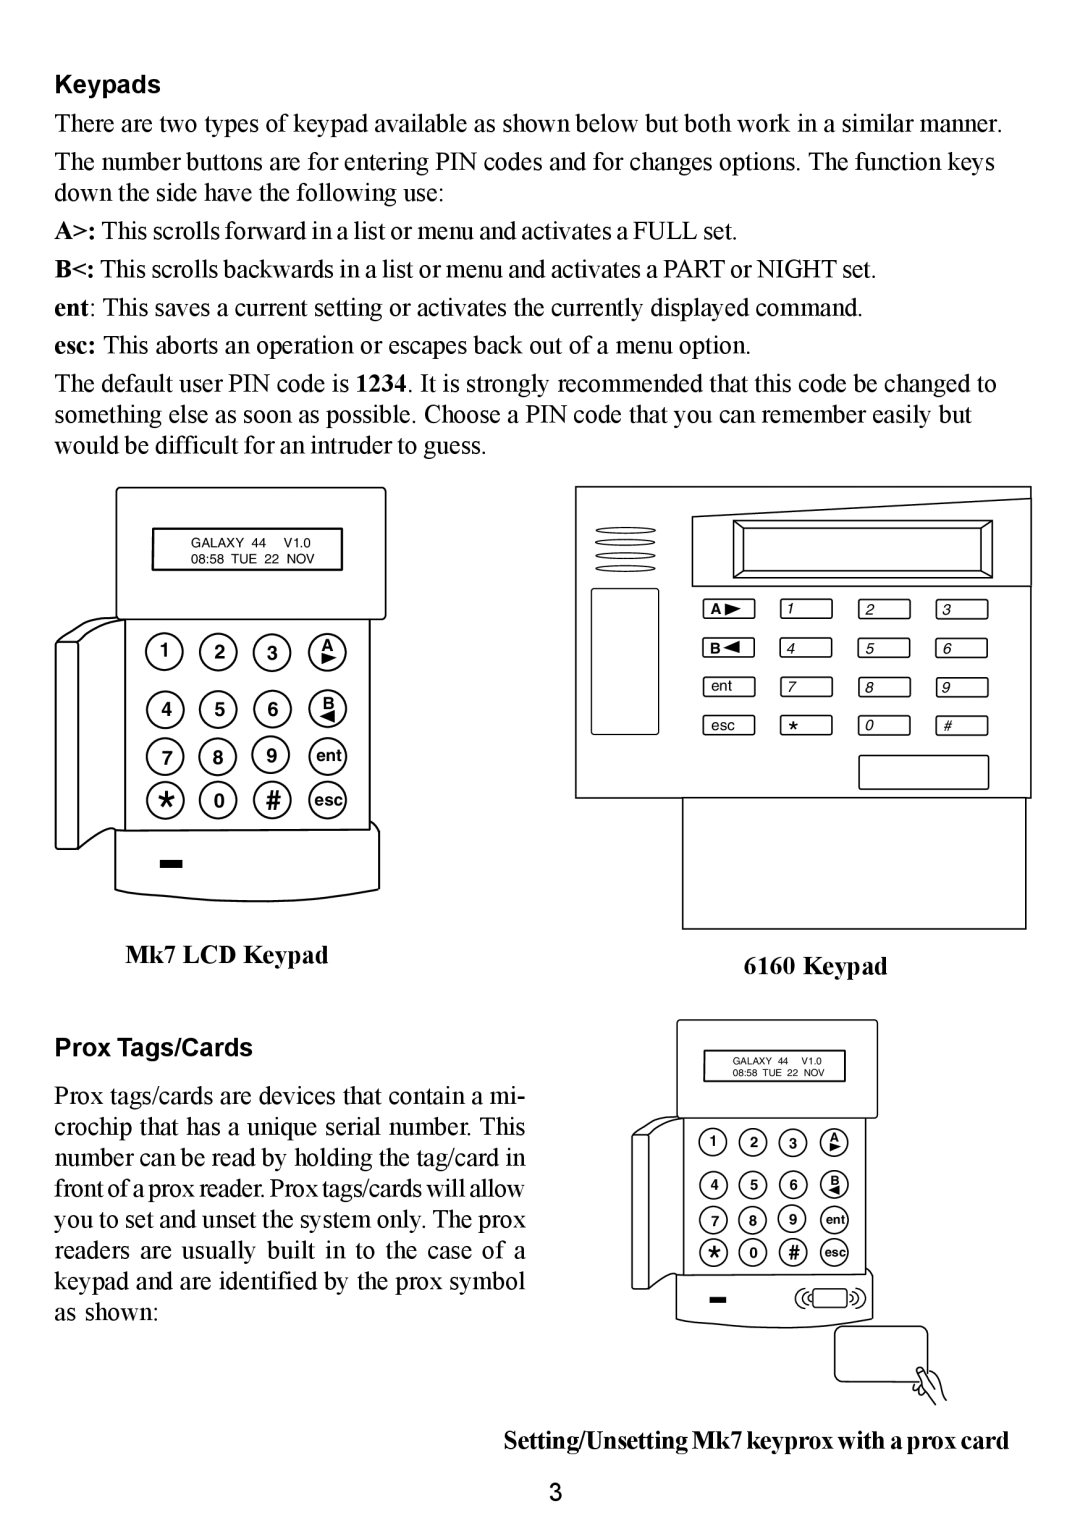 Honeywell Galaxy 2 manual Keypads, Mk7 LCD Keypad, Prox Tags/Cards, Setting/Unsetting Mk7 keyprox with a prox card 